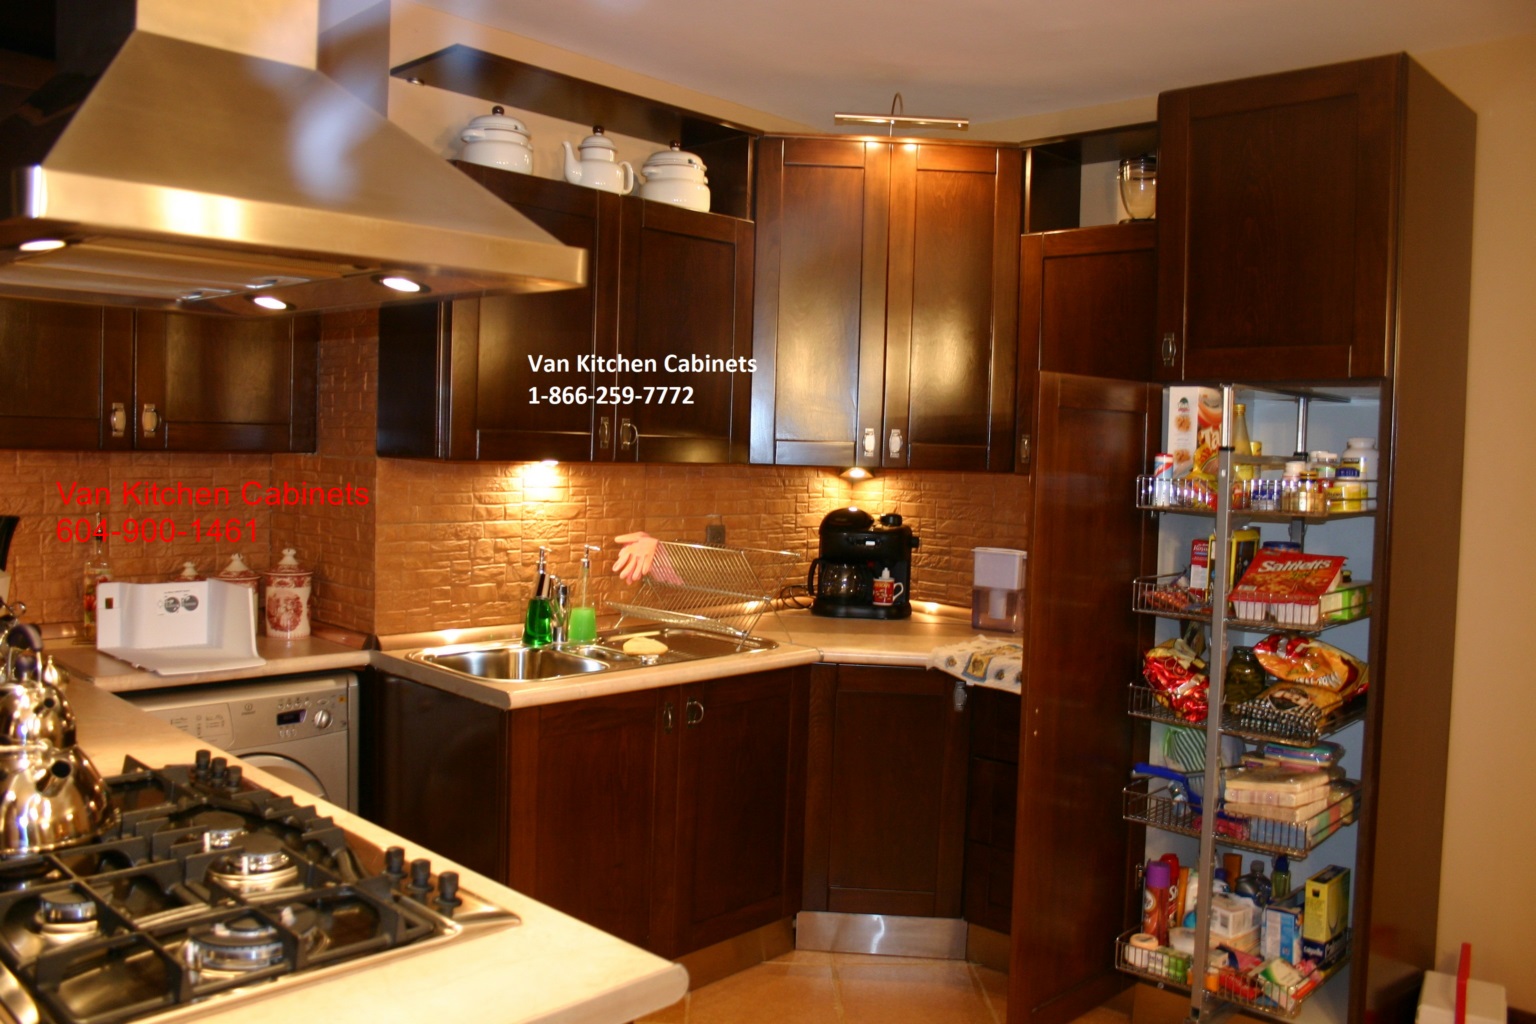 Kitchen cabinets renovation
home renovations vancouver